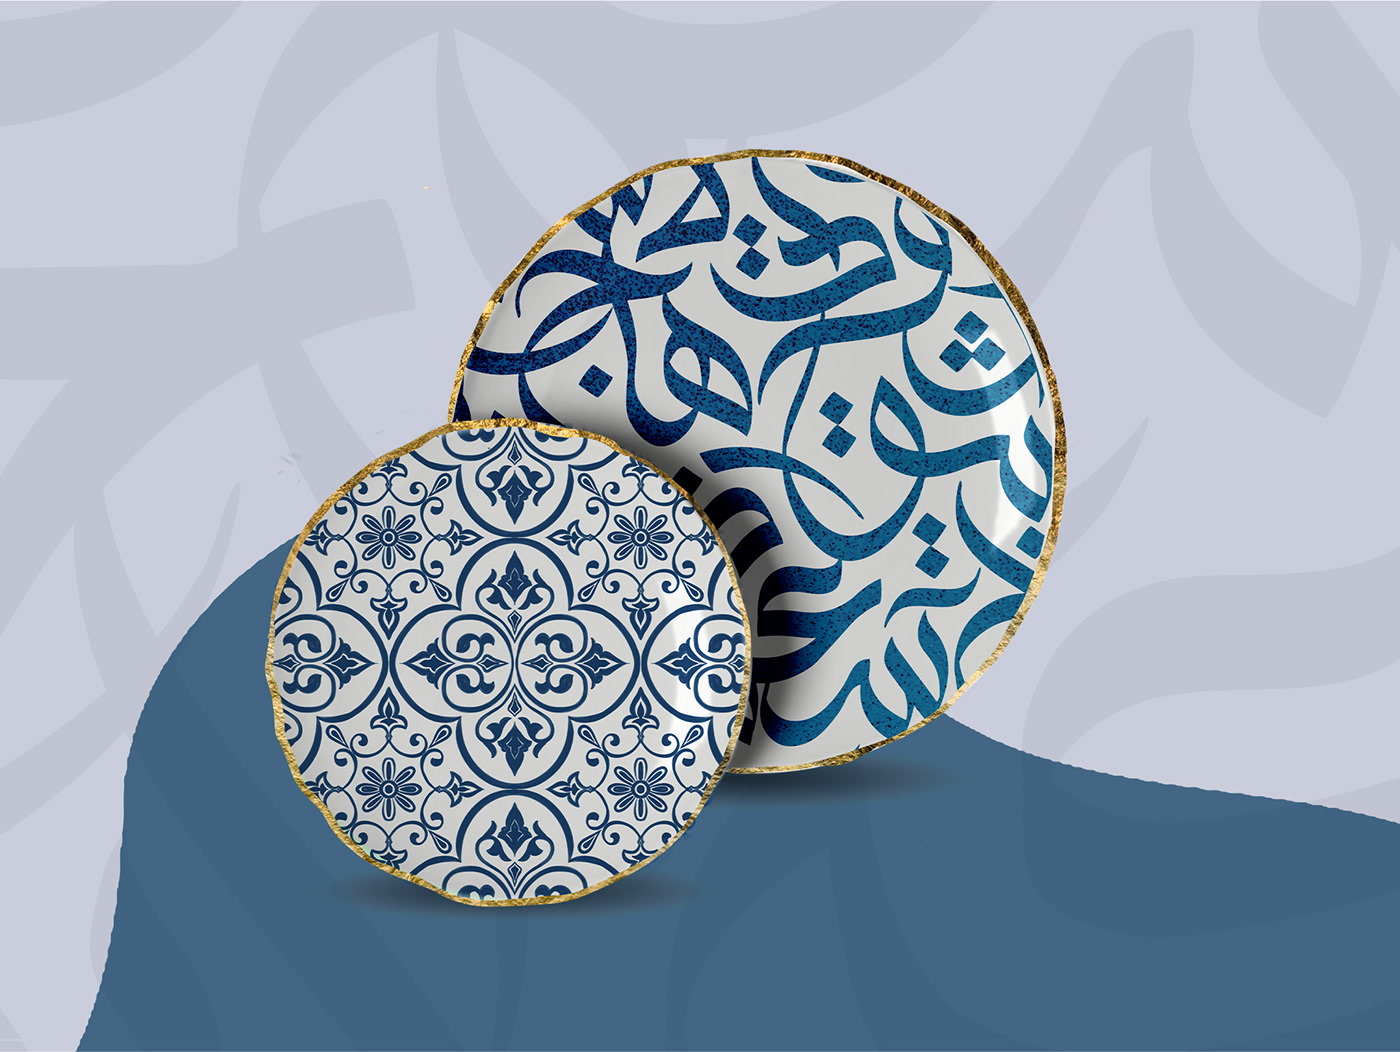 Arabic Calligraphy Tableware Collection 
visit: www.behance.net/jubayerdcd